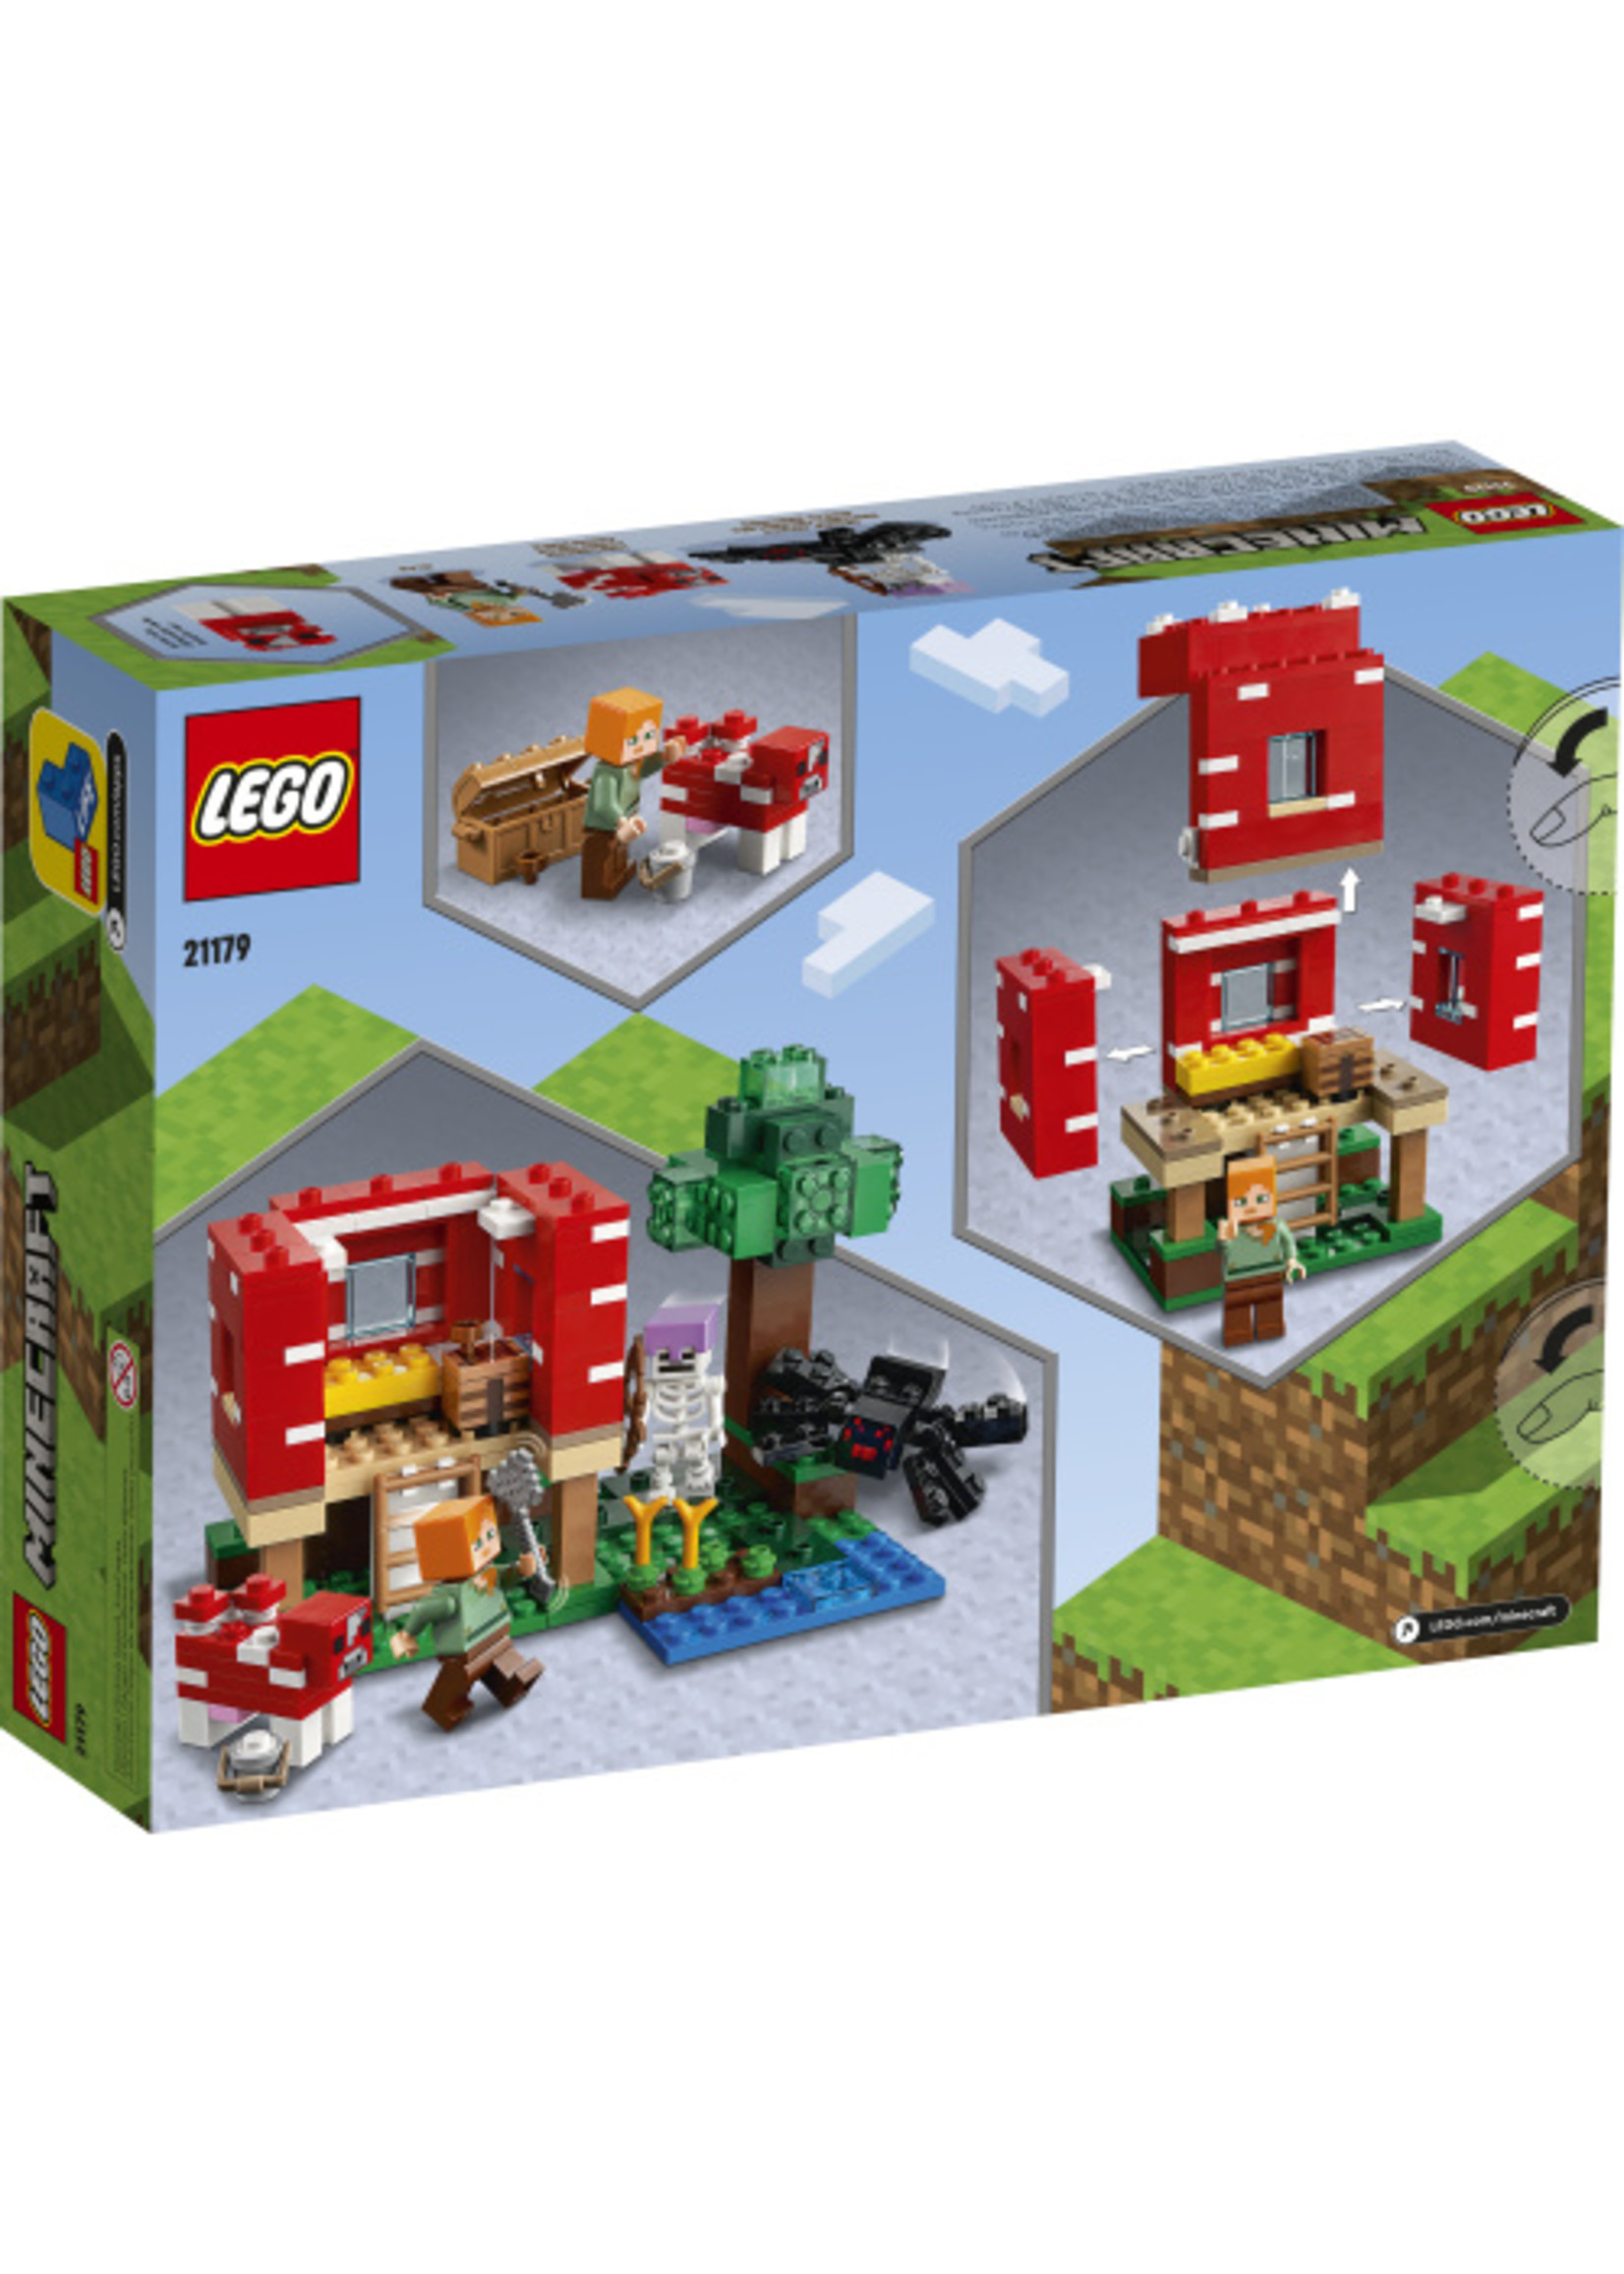 LEGO 21179 - The Mushroom House